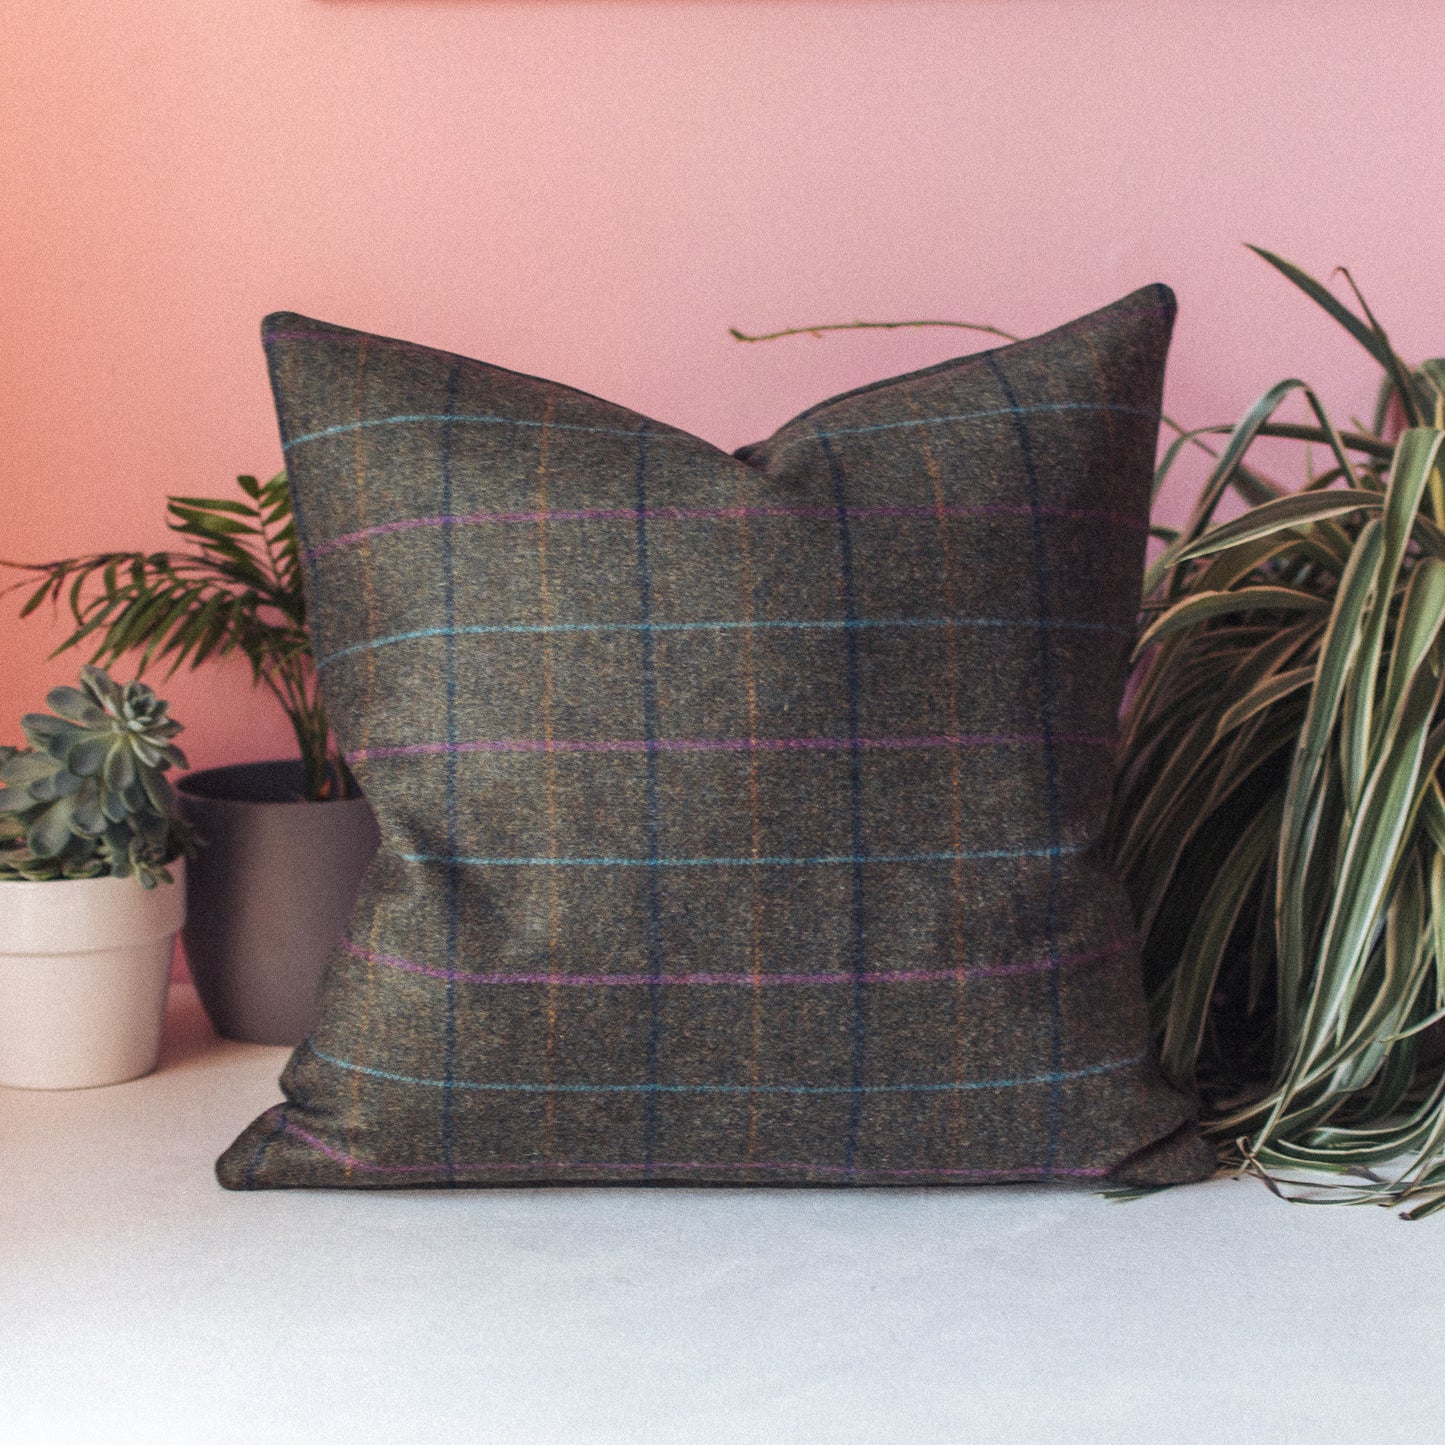 F&B Crafts Lasklill Tweed Cushion - Moss Green with Navy, Light Blue, Orange and Pink colour checks - Handmade in Malton Yorkshire